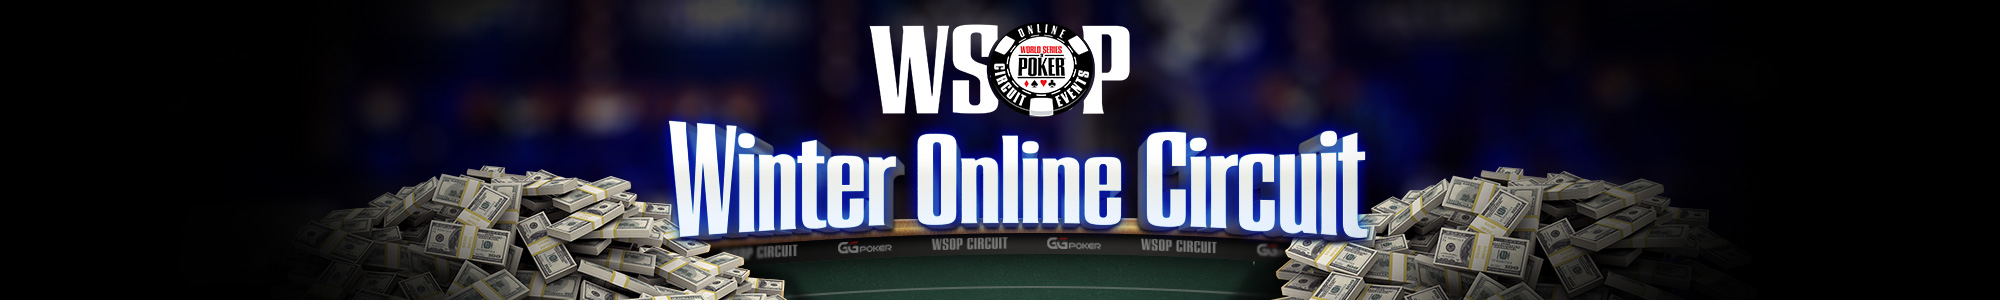 ggpoker online poker wsop winter circuit event